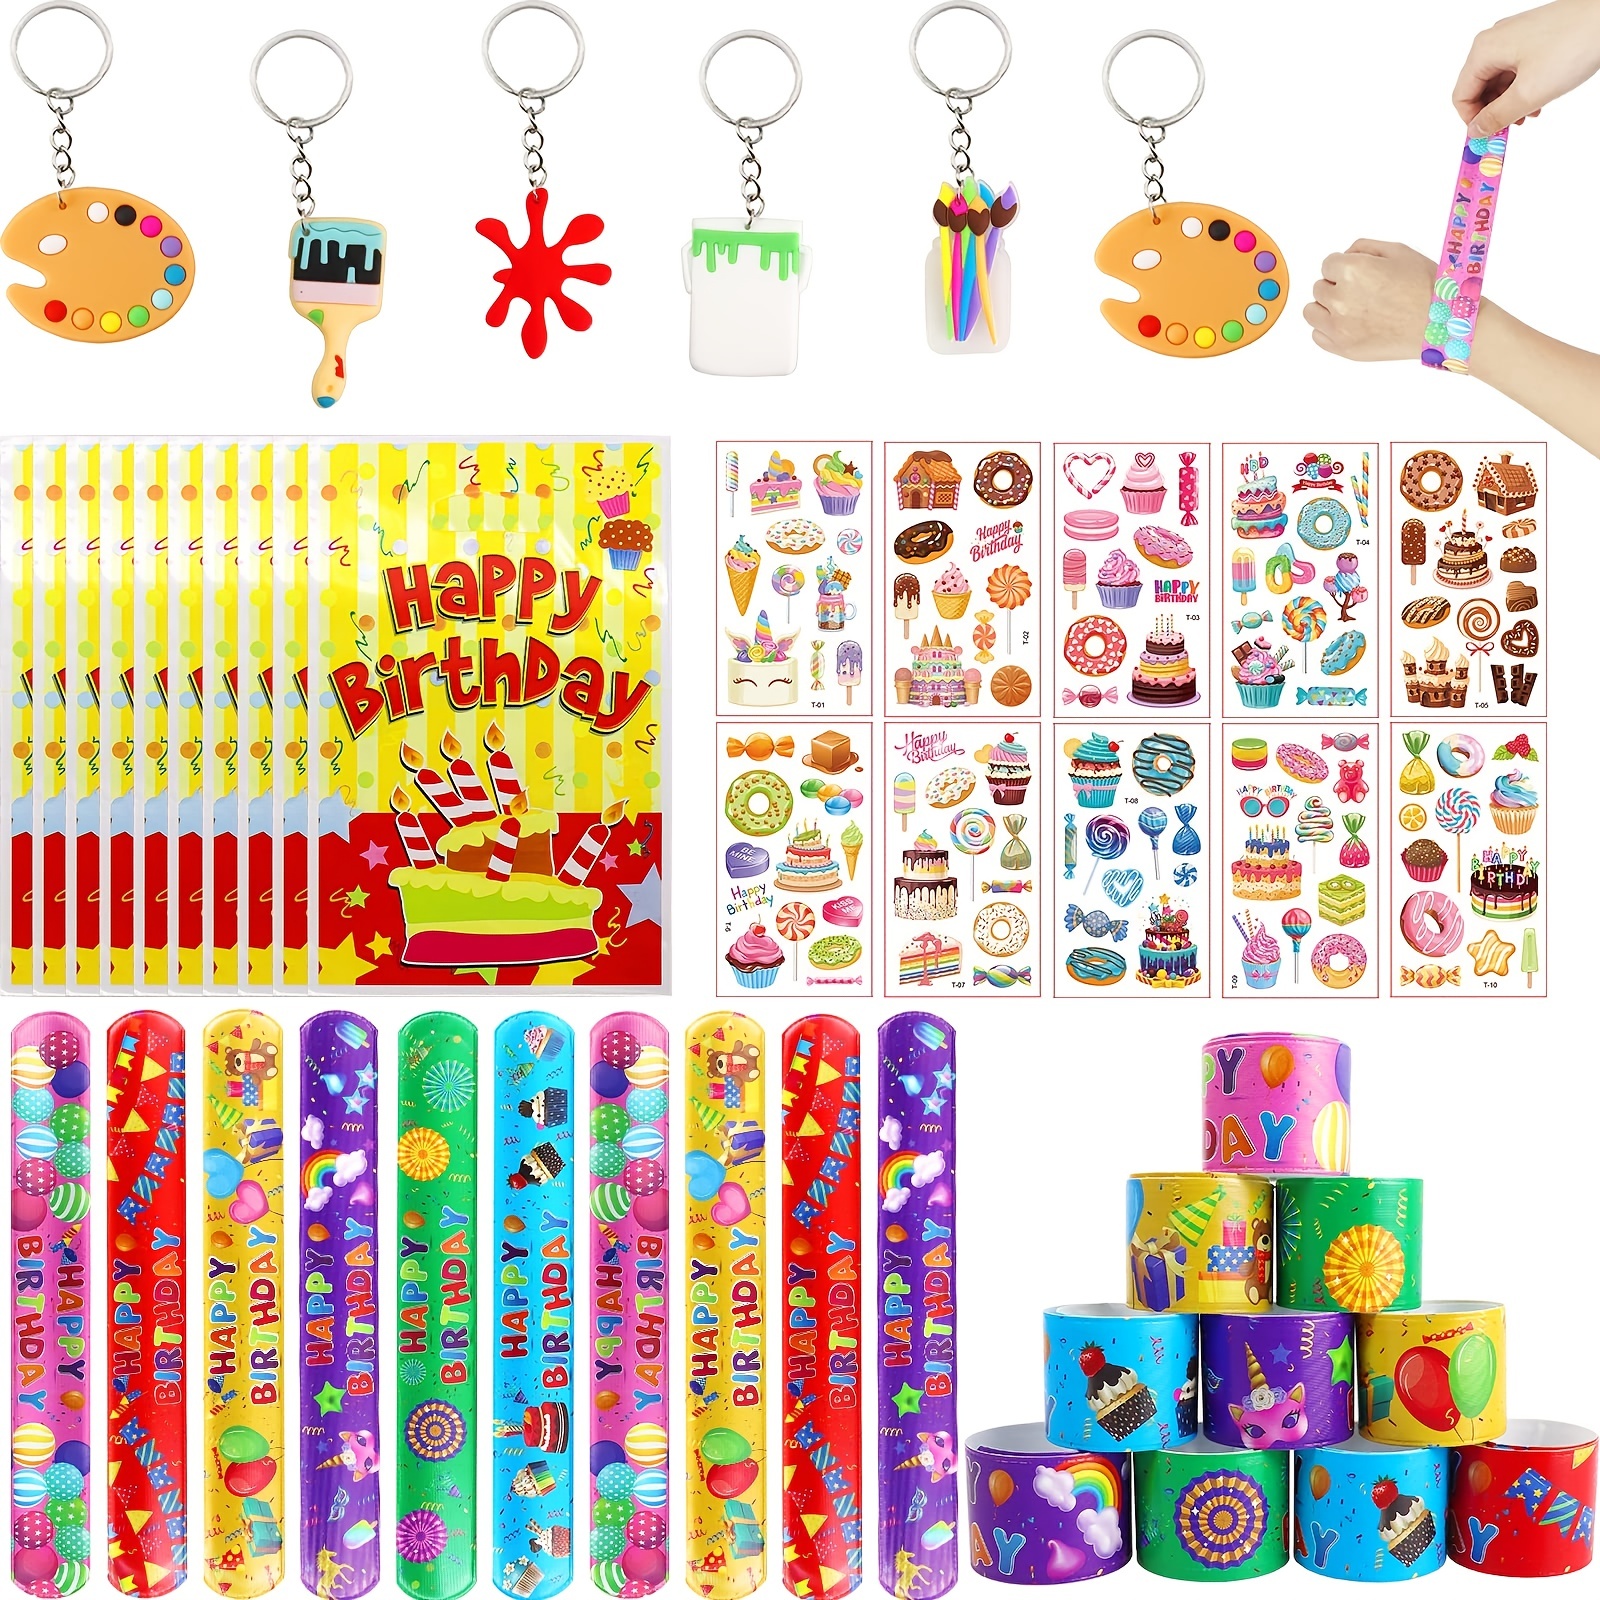 Set de 36 juguetes variados para piñata